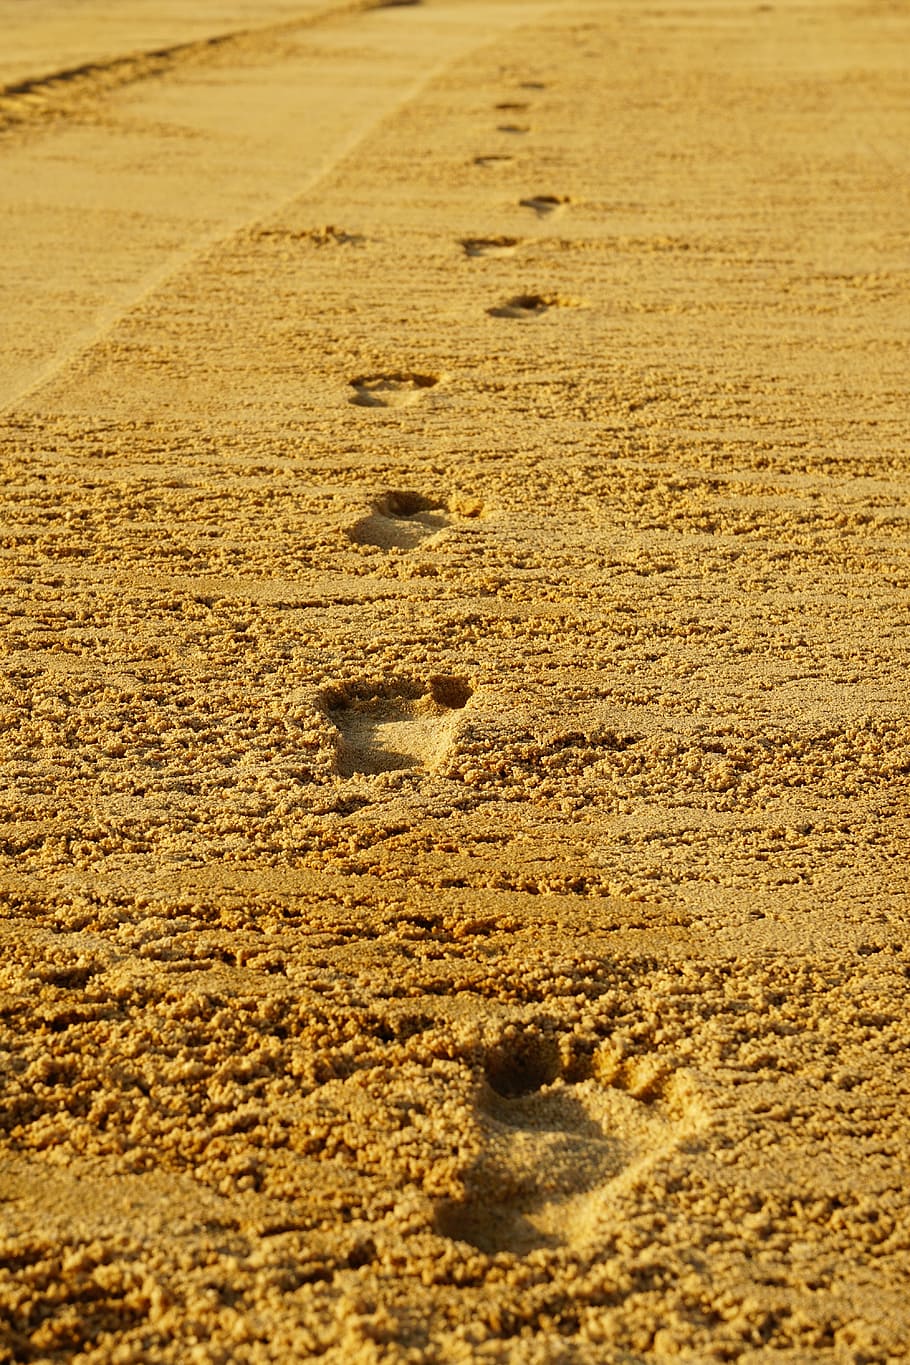 human, Footprints, Sand, Barefoot, Run, brown sand, tracks in the sand, footprint, track - imprint, paw print